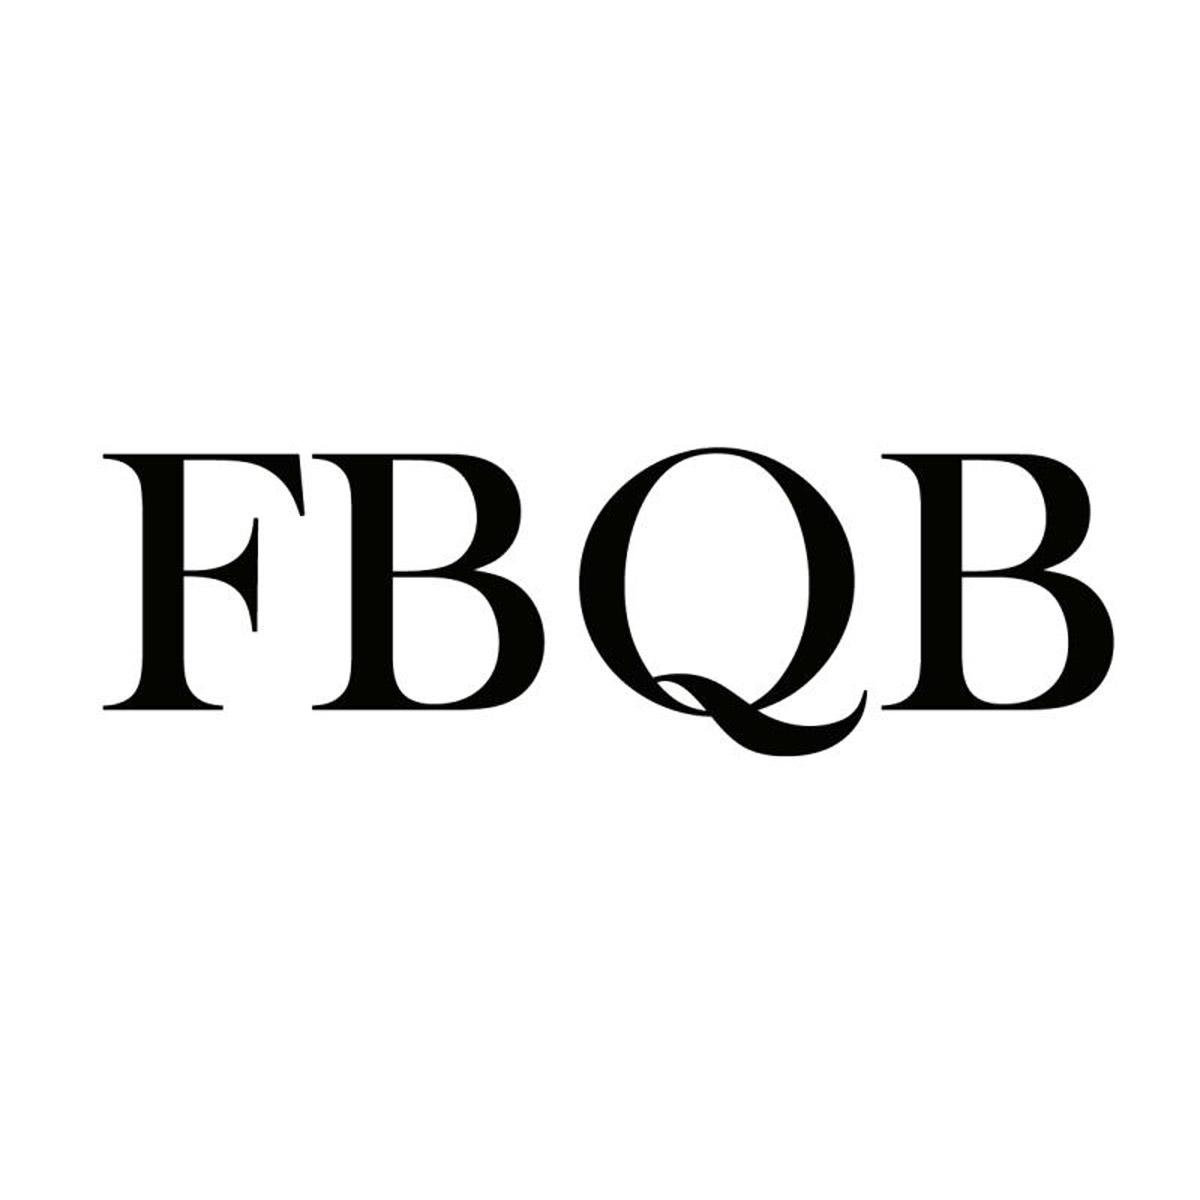 FBQB手笼商标转让费用买卖交易流程